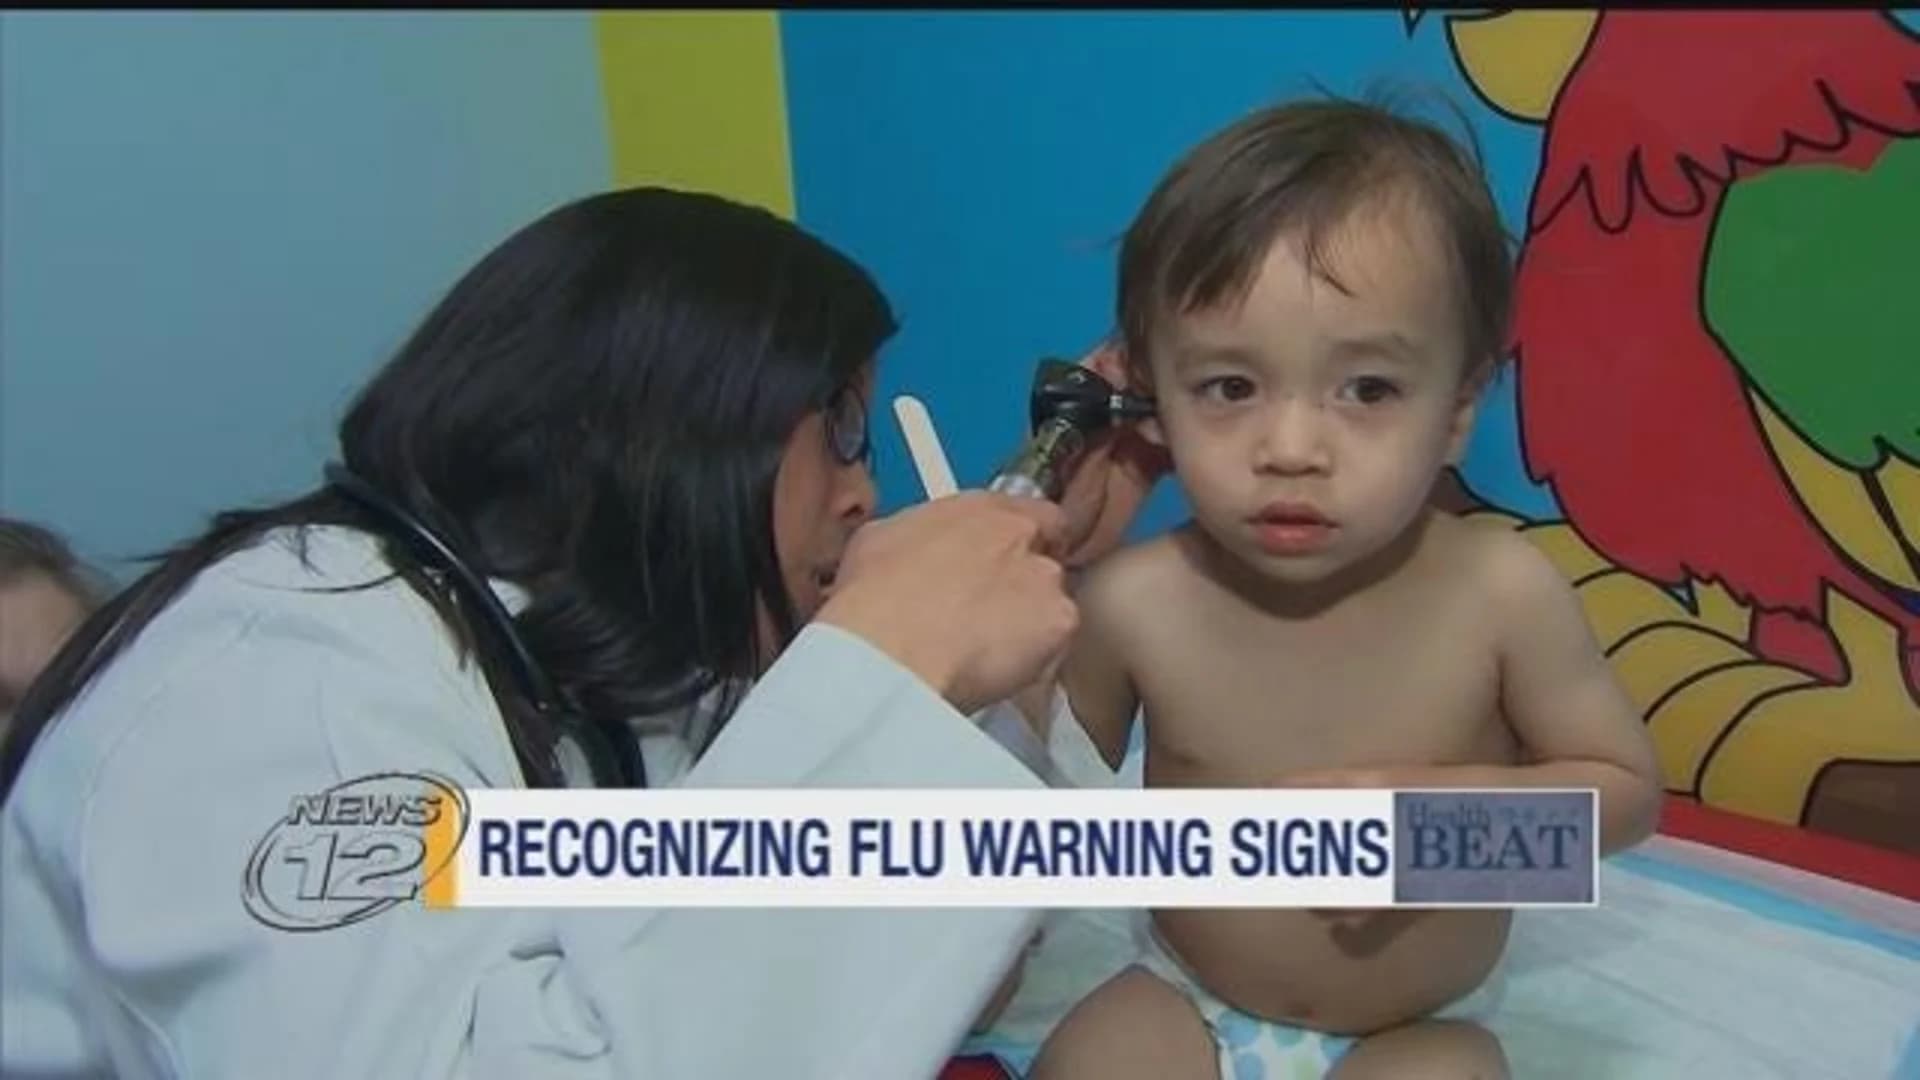 CDC: Recognizing early flu symptoms in kids is vital